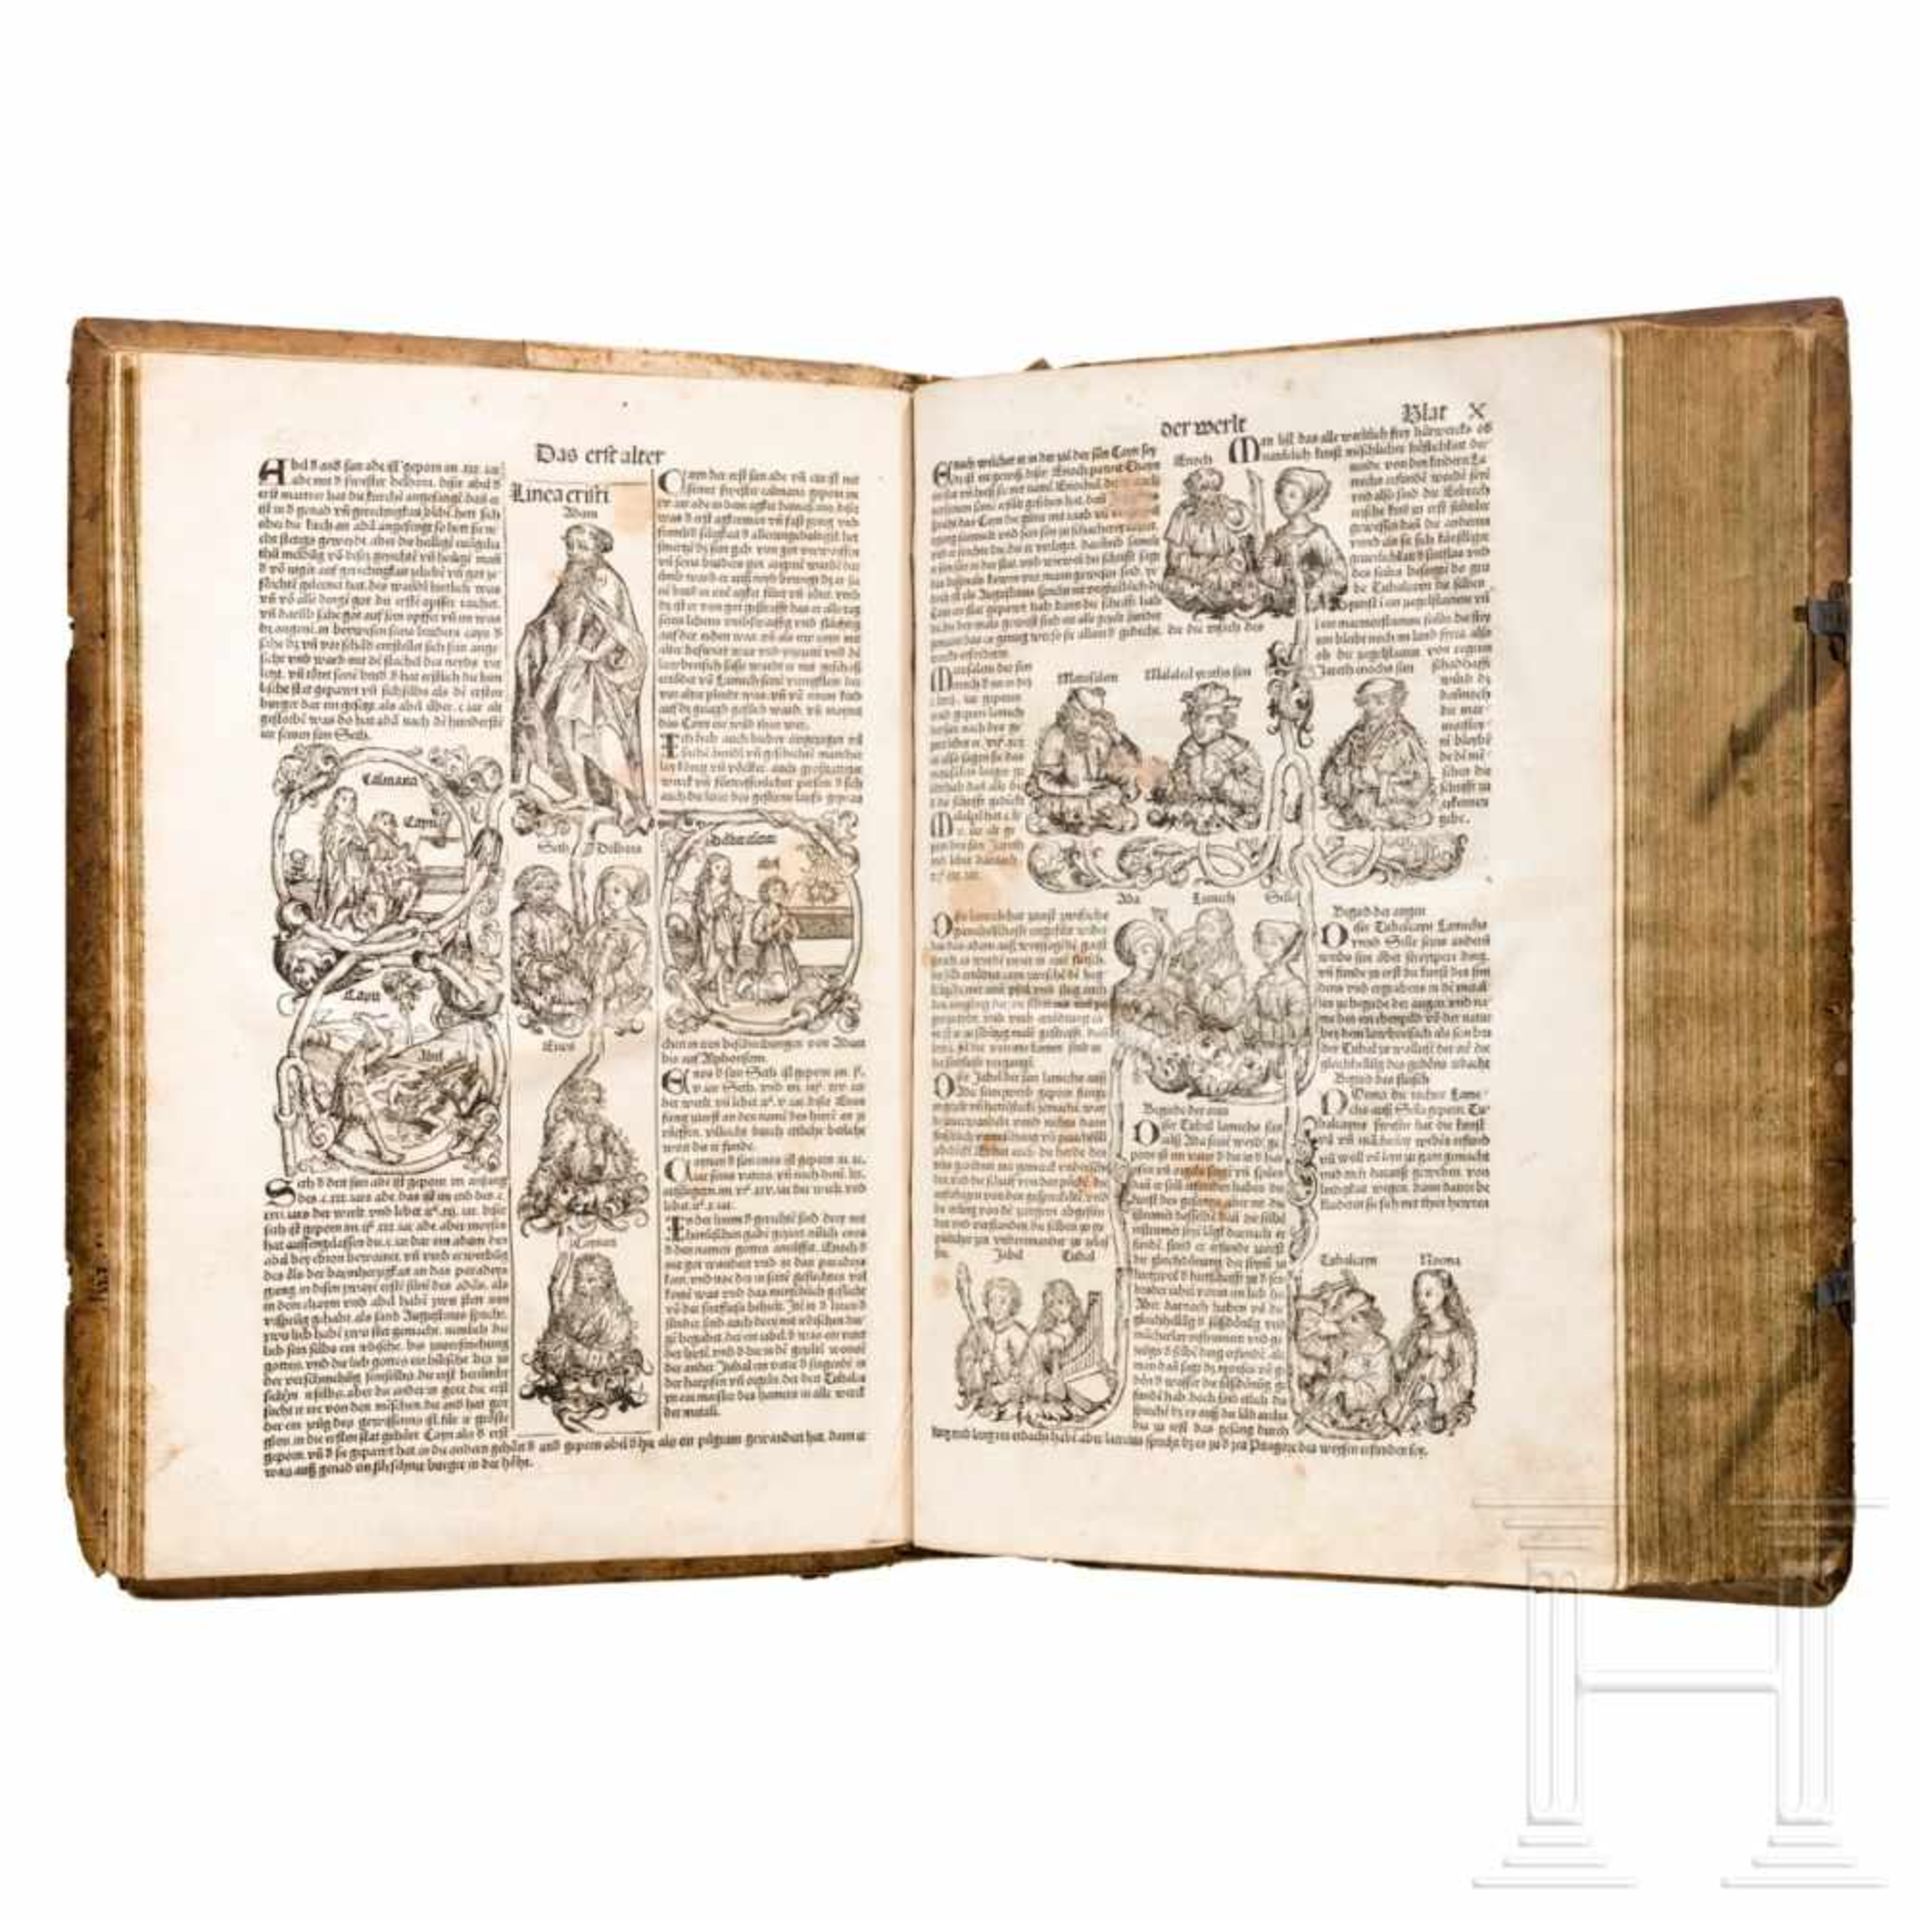 Hartmann Schedel, Das Buch der Chroniken, Nürnberg, A. Koberger, 1493 - Image 40 of 51